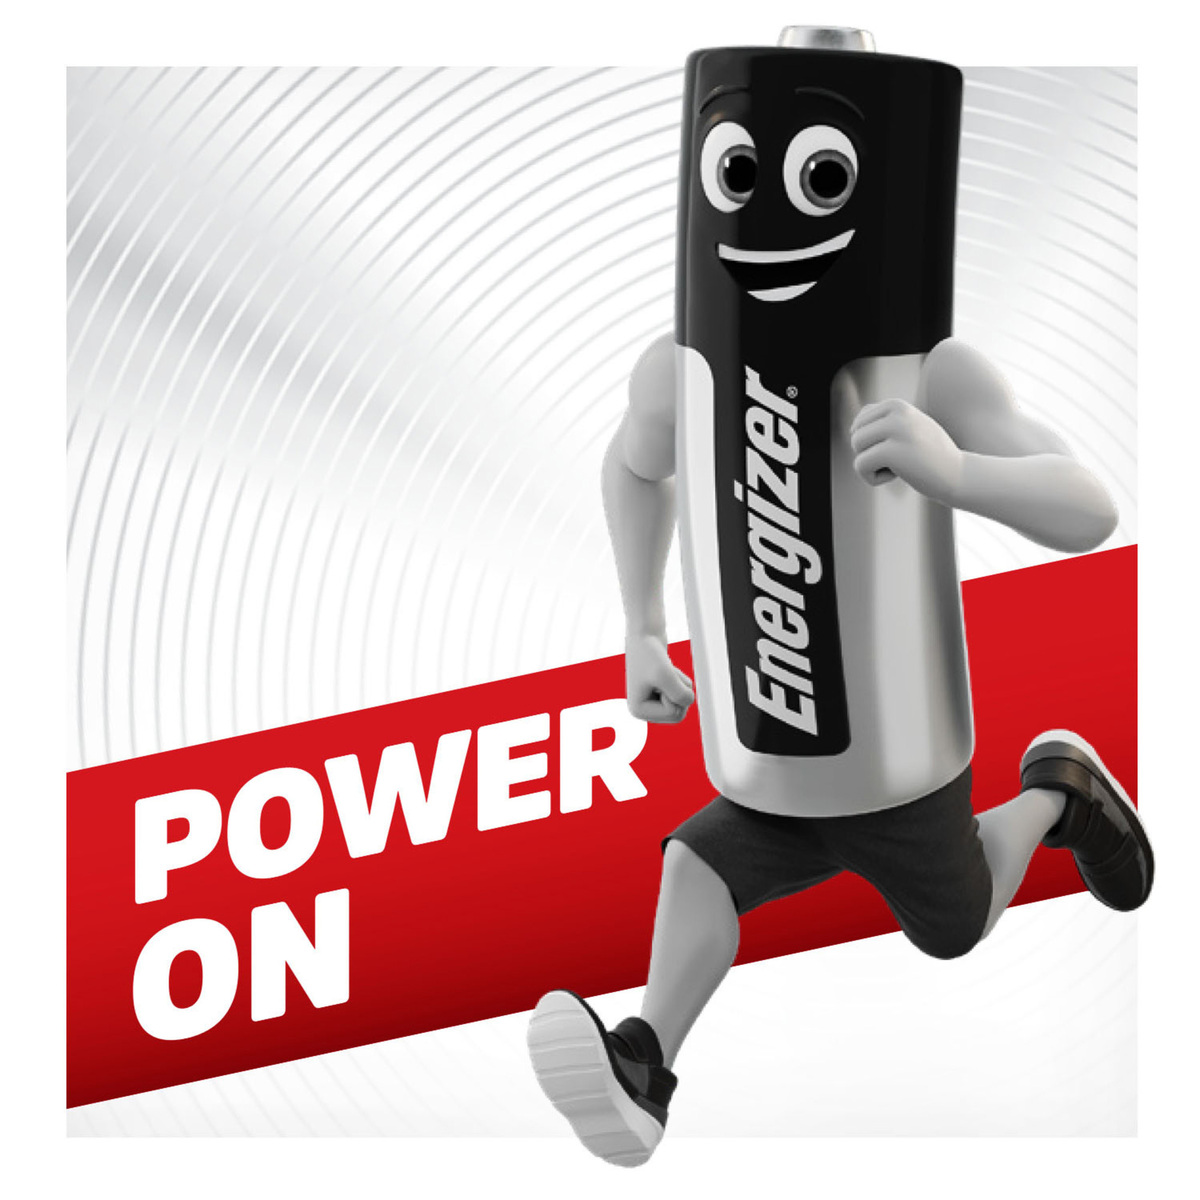 Energizer CR2032 Lithium Coin Batteries, 4 Pcs, E-CR2032 BP4